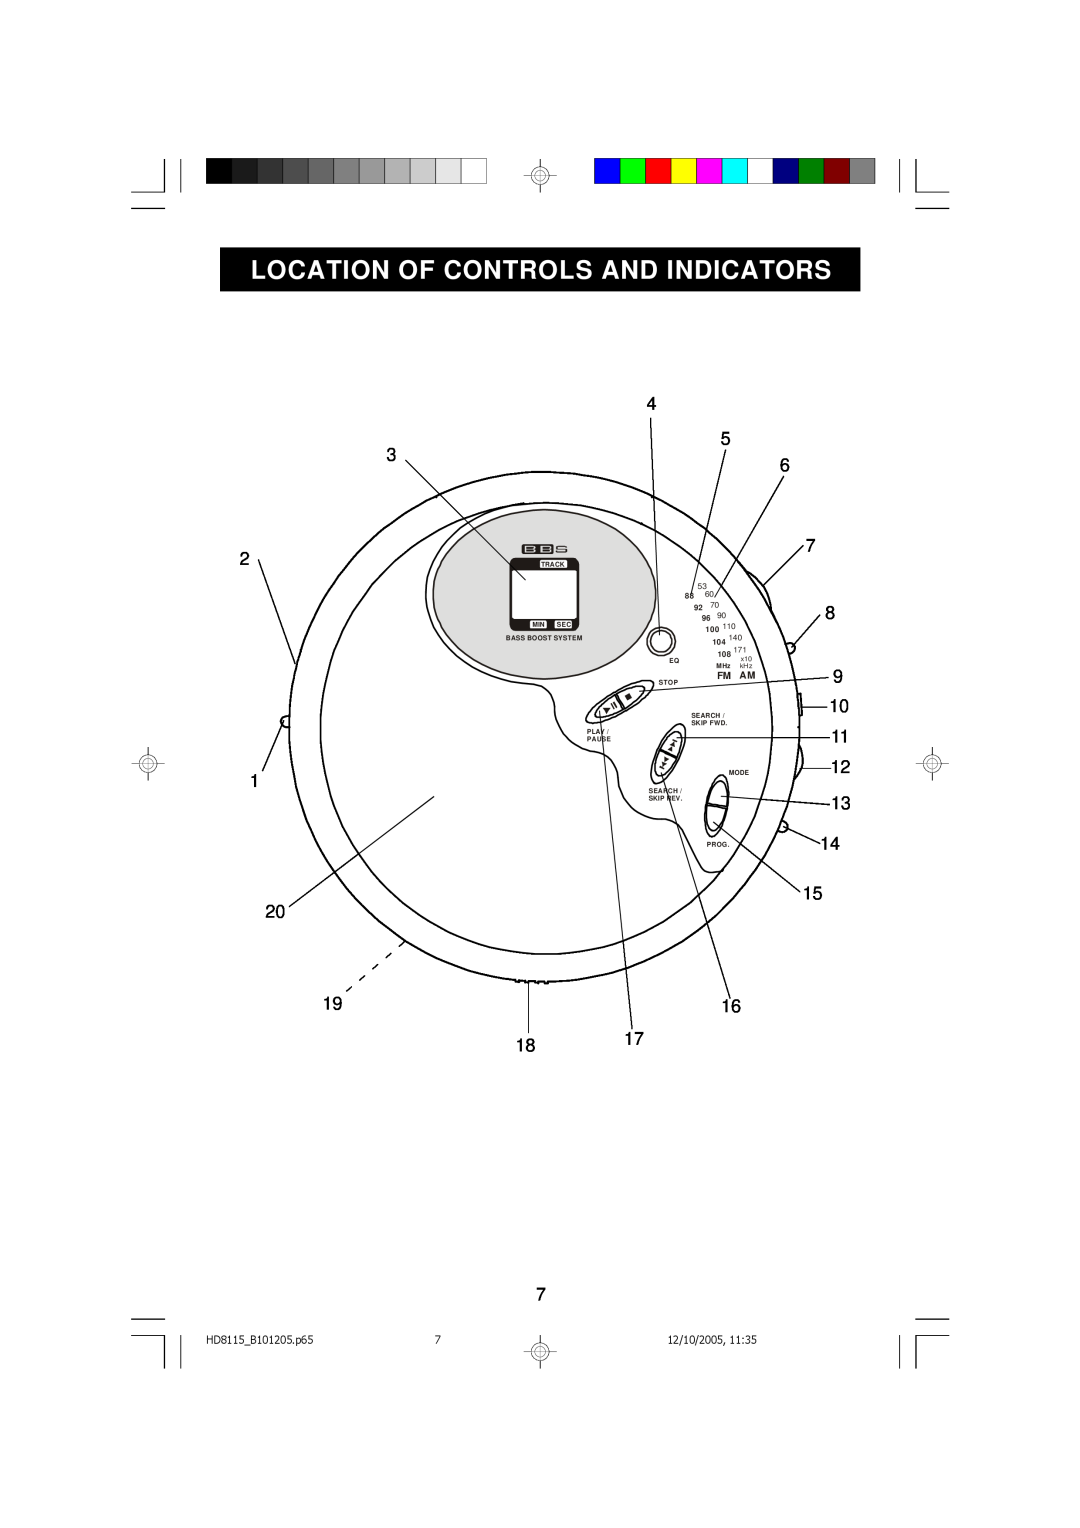 Emerson owner manual Location Of Controls And Indicators, HD8115_B101205.p65, 12/10/2005, 11:35, Fm Am 